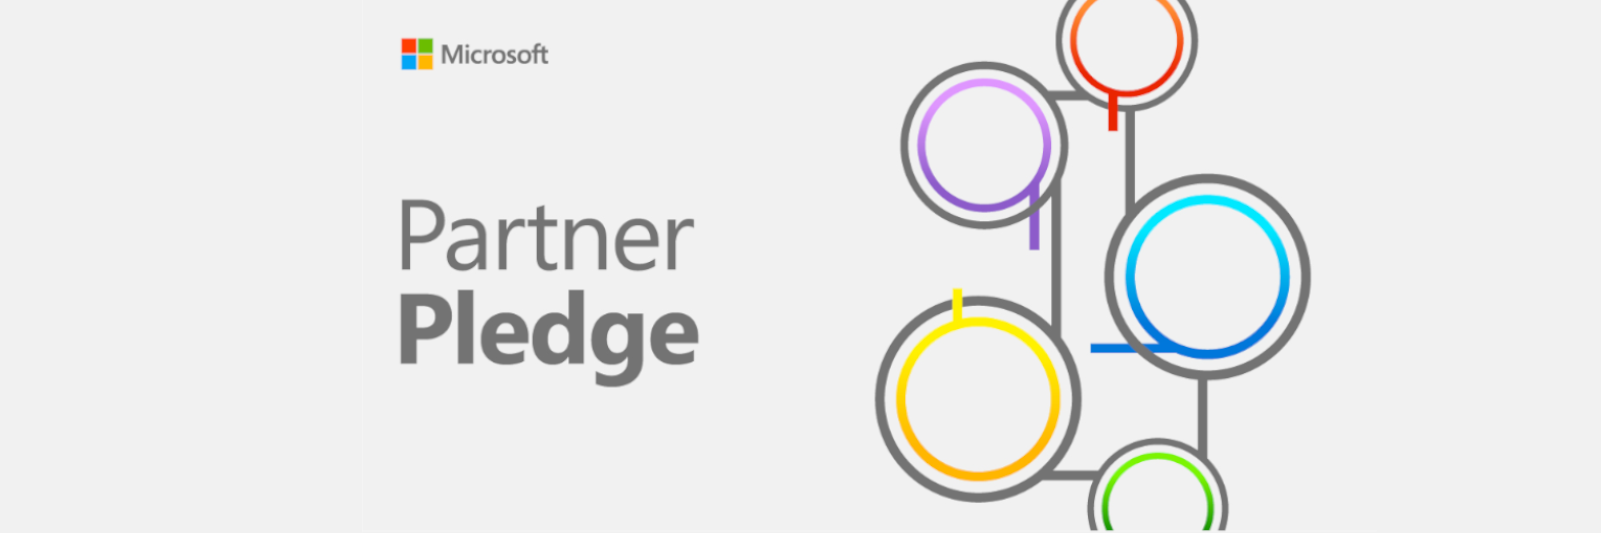 Microsoft Partner Pledge news-1